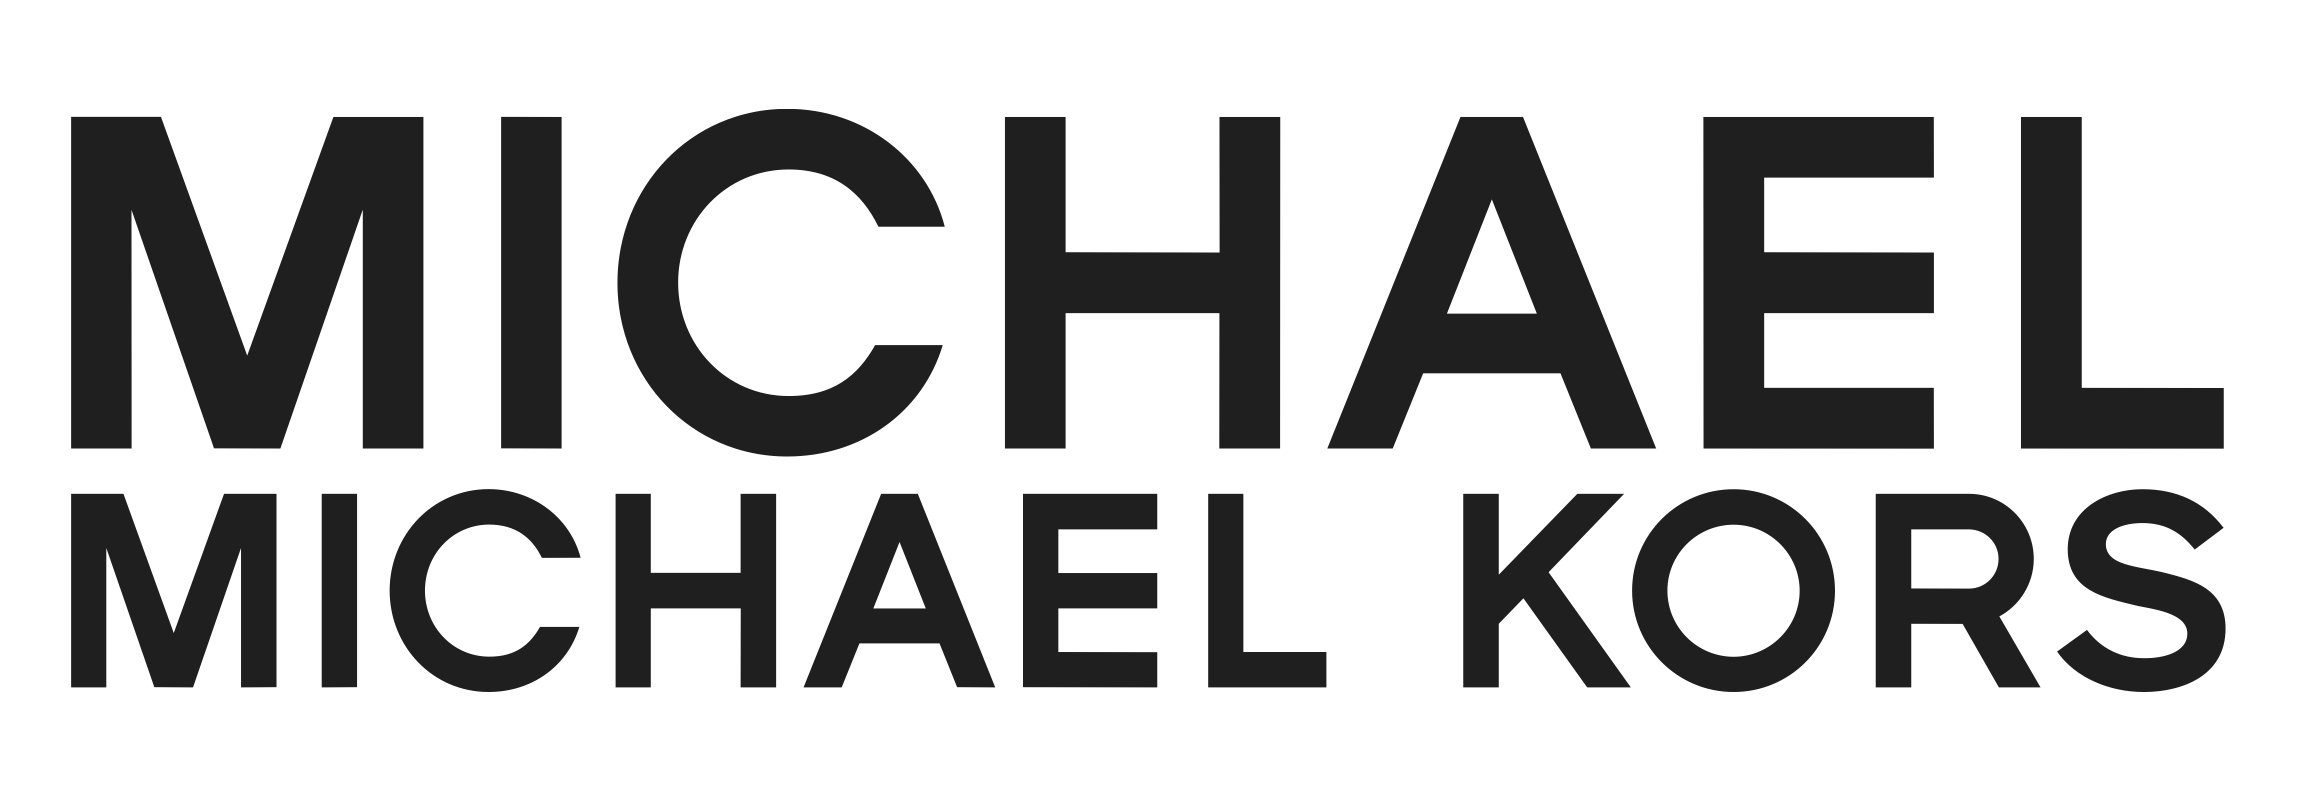 logo michael kors vector